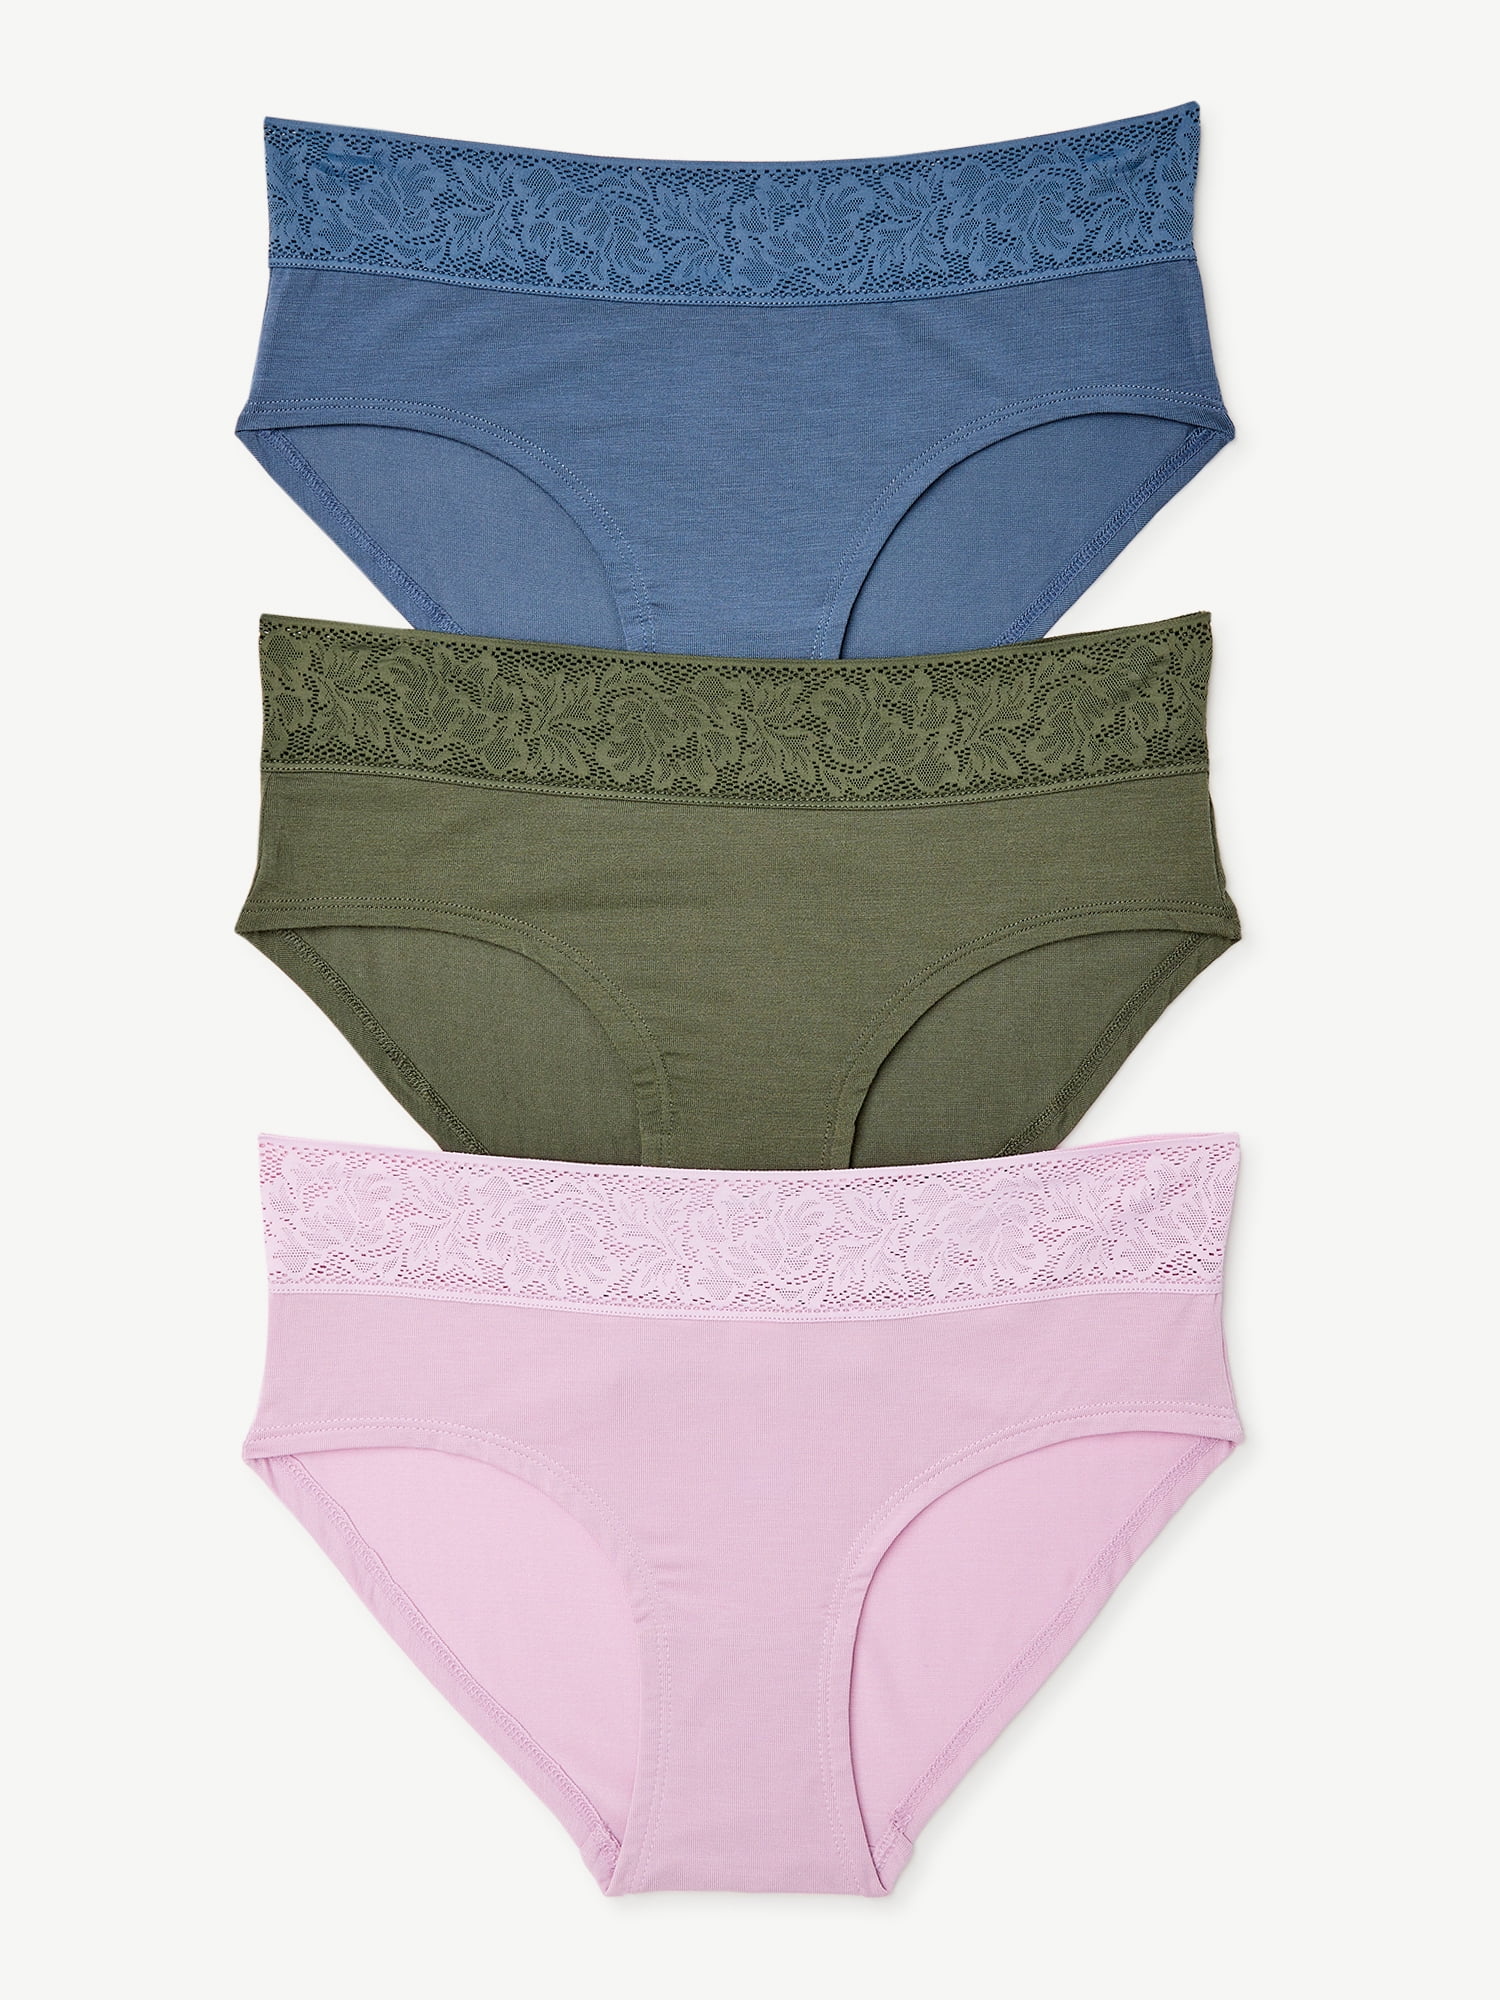 Joyspun Women's Modal and Lace Hipster Panties, 3-Pack, Sizes S to 3XL 